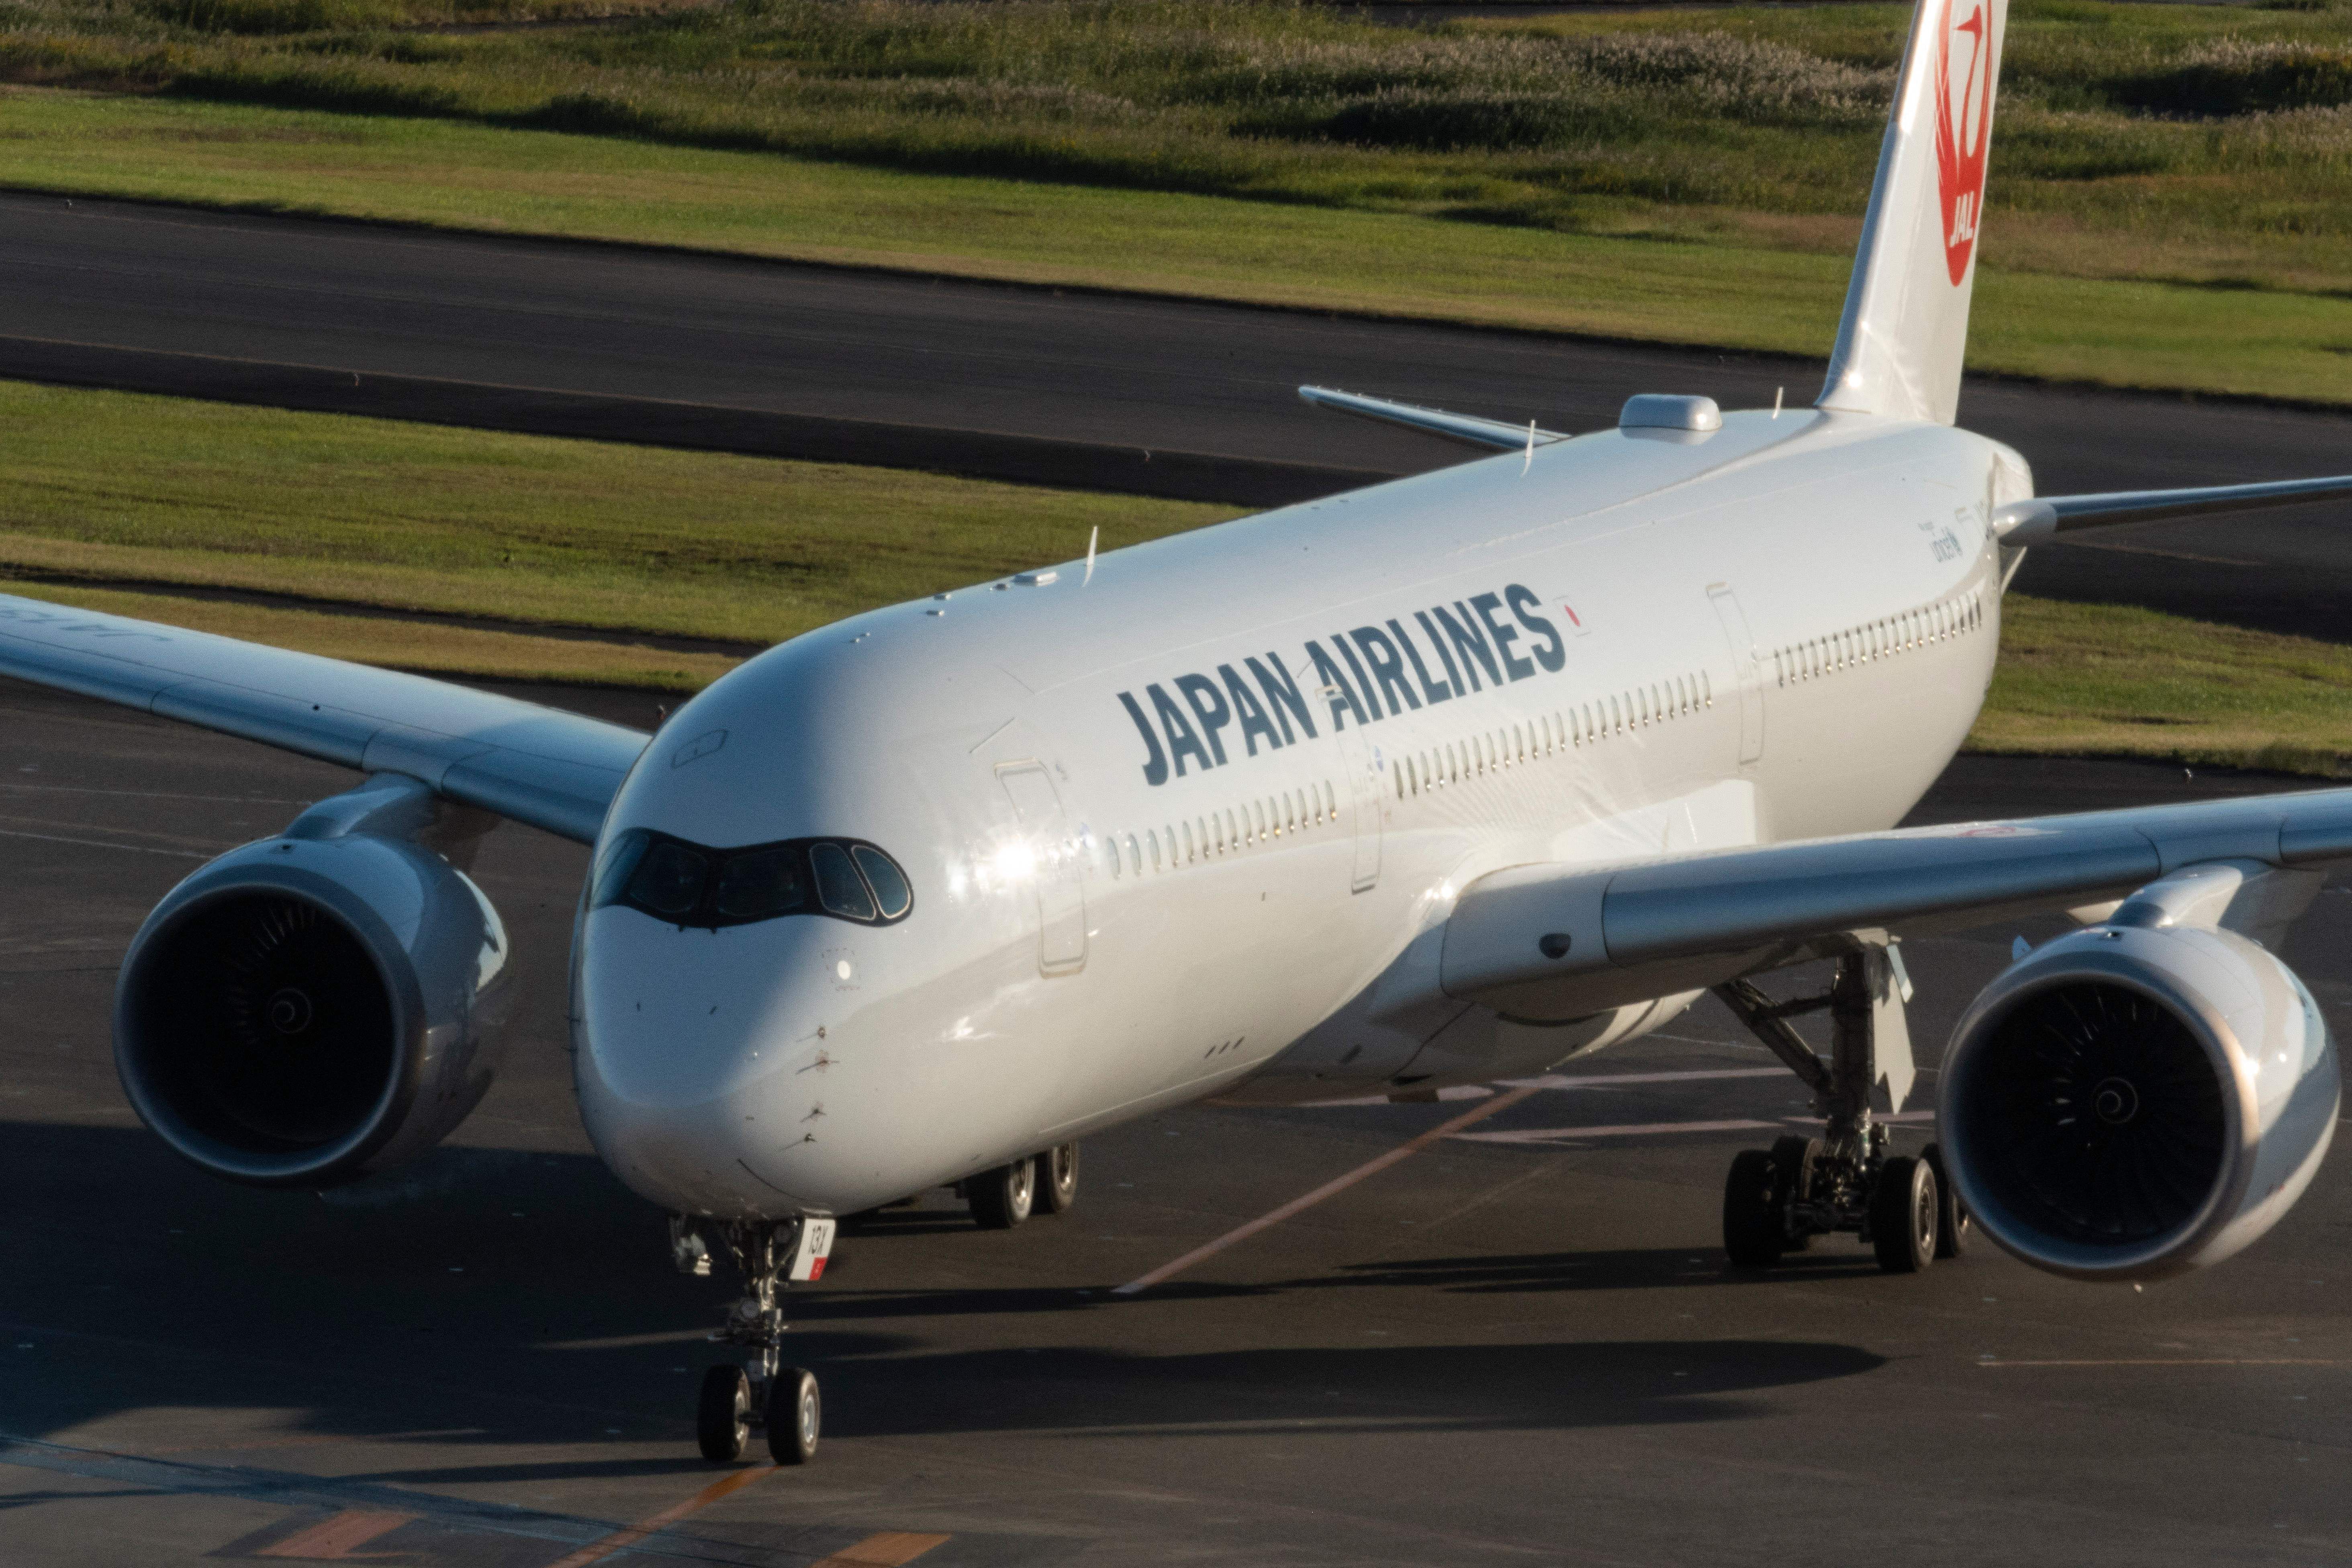 Japan Airlines (JAL) arriving at a gate at Tokyo International Airport at Haneda in Tokyo